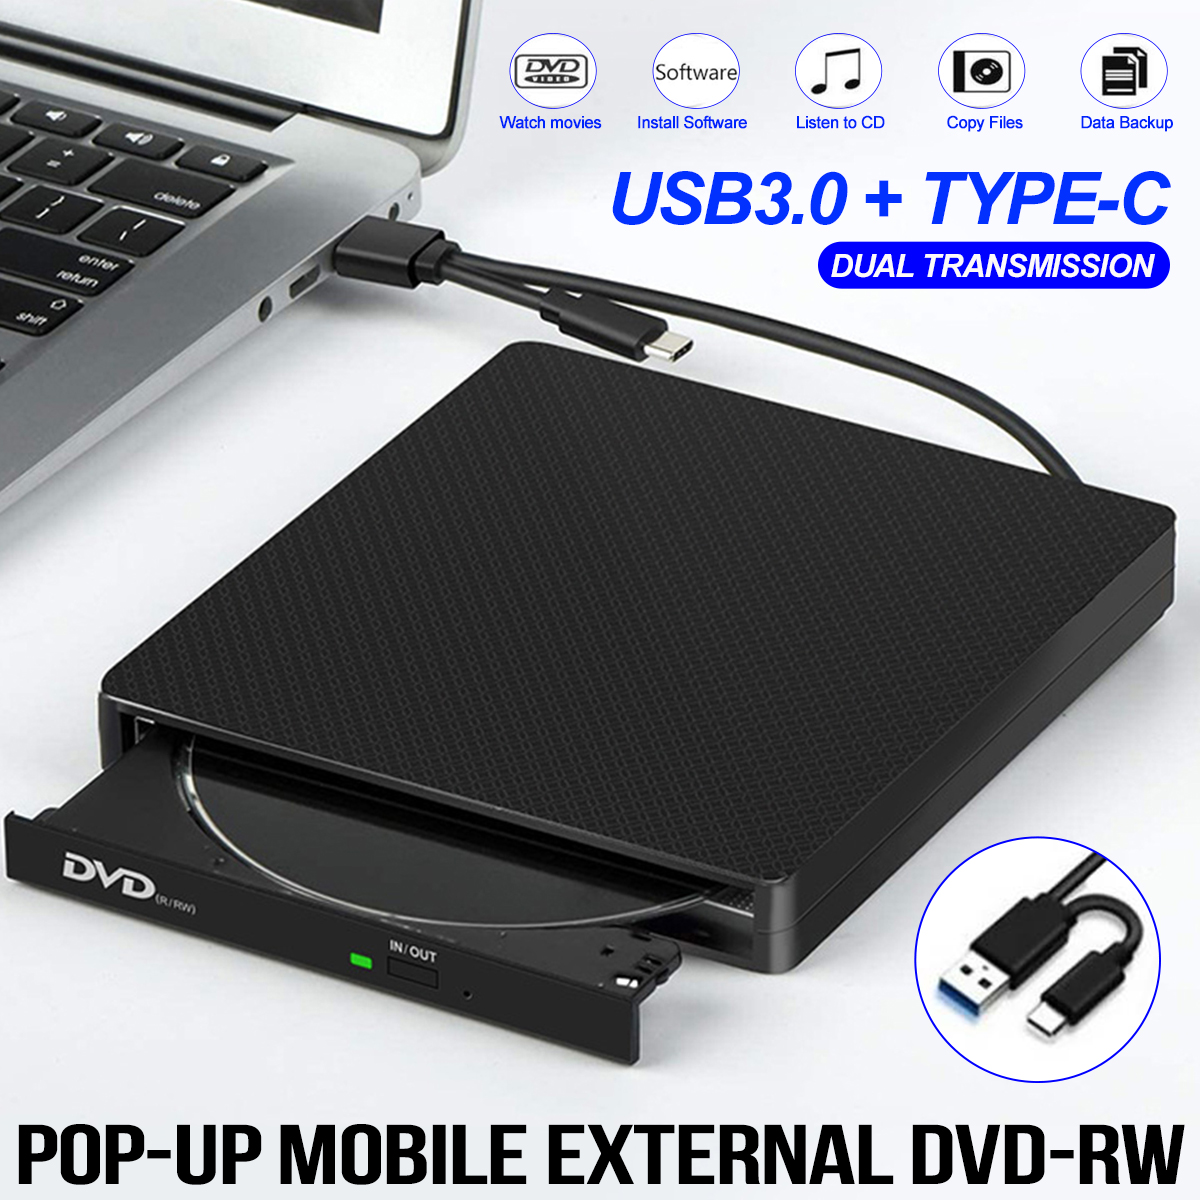 USB3.0 Type-C CD DVD External Optical Drive DVD-RW Player High Speed Data Transfer External Burner Writer Rewriter for Computer PC Laptop XD009